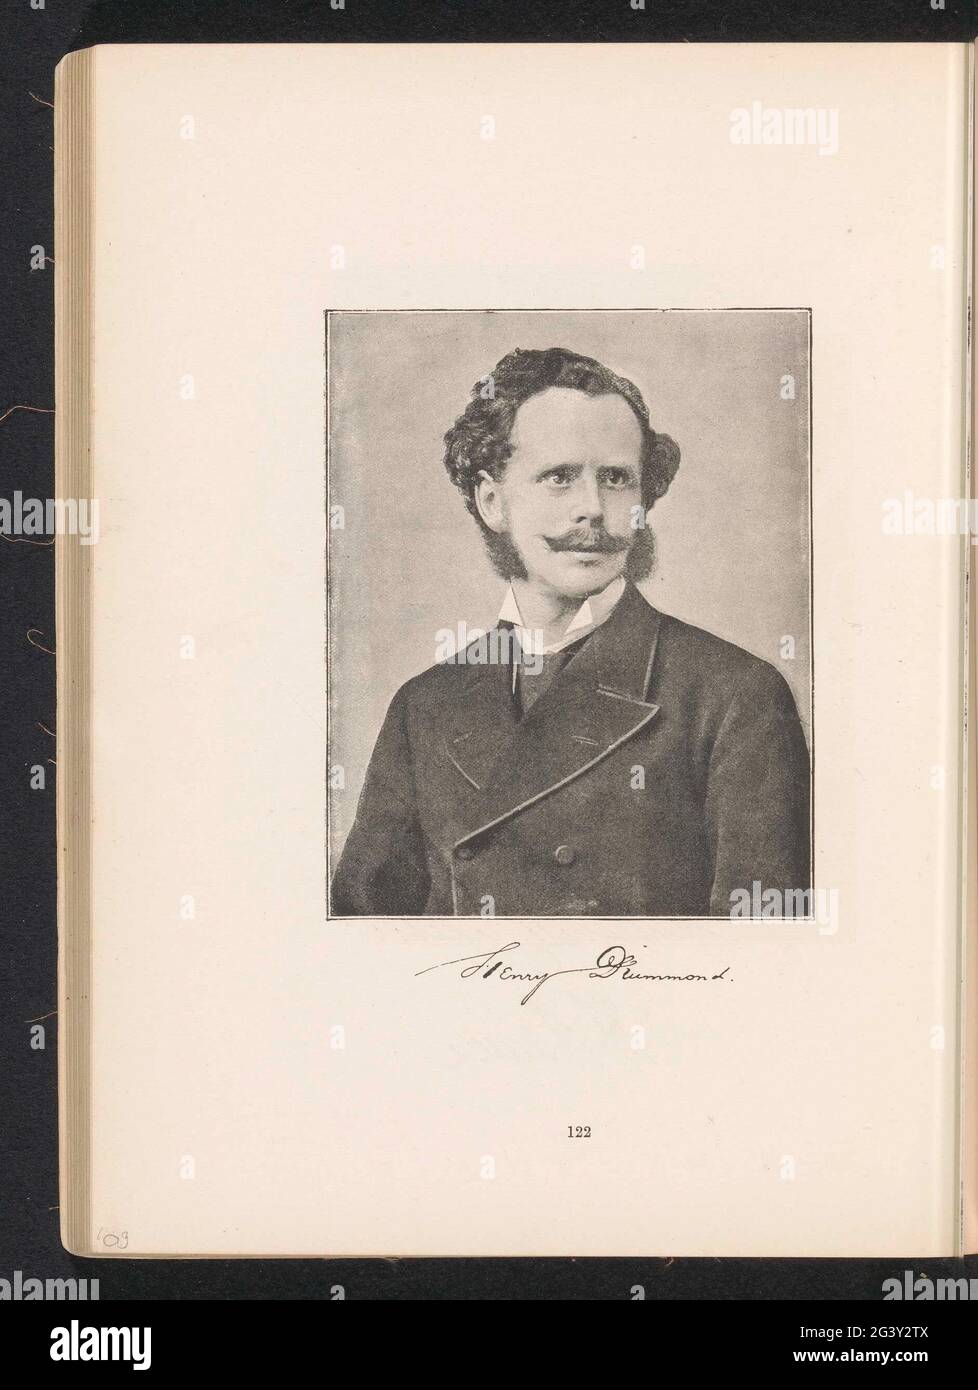 Portrait of Henry Drummond. . Stock Photo